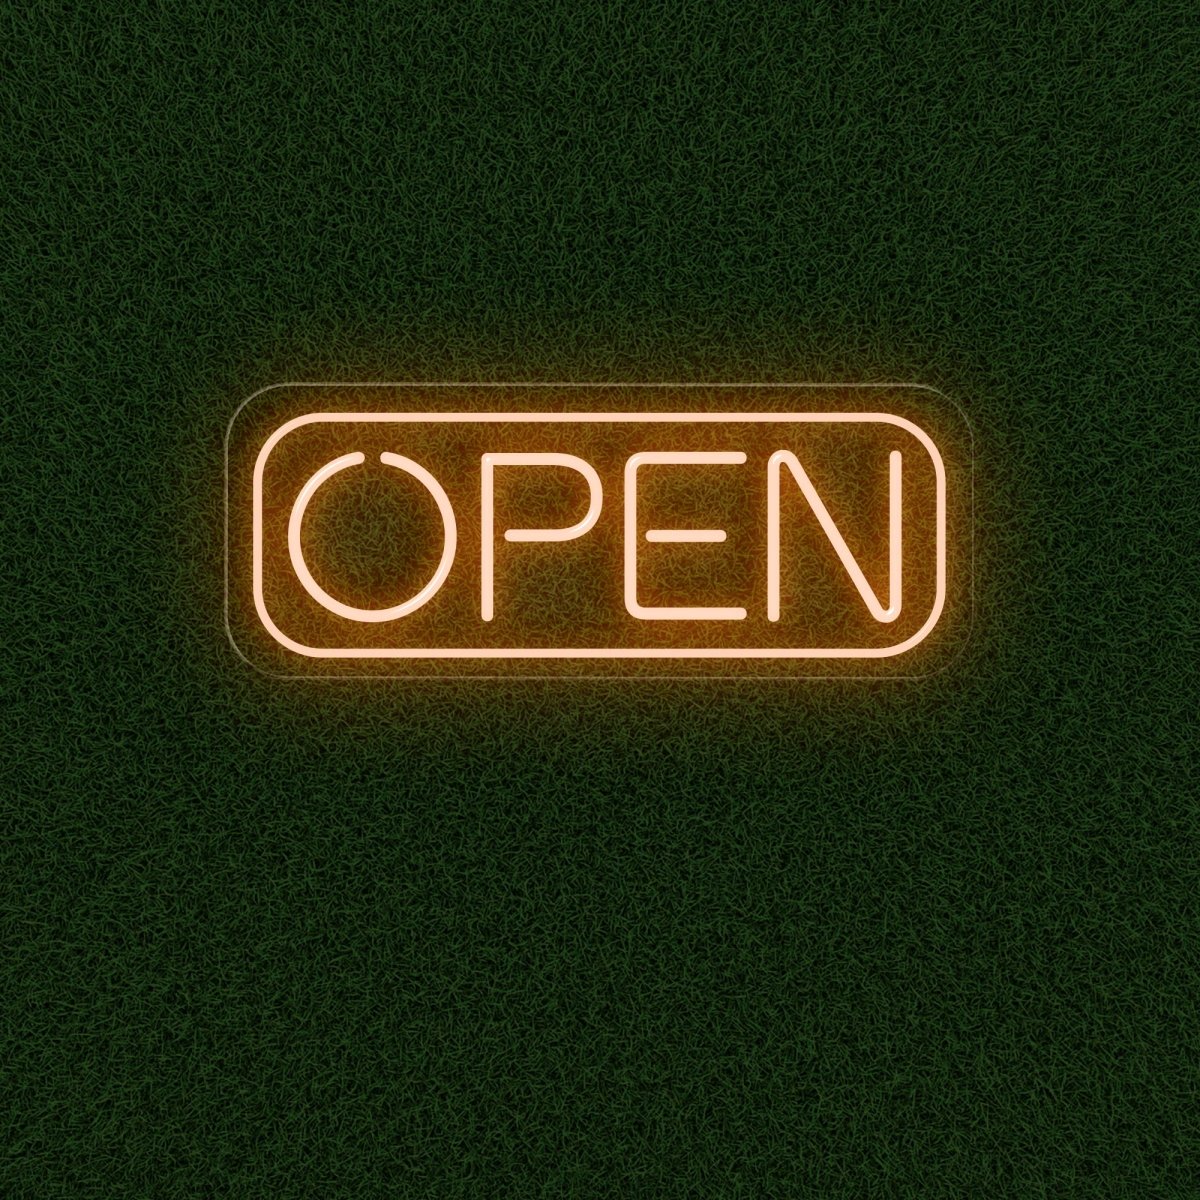 Neon Open Sign LED Light - Brighten Your Business Entrance - NEONXPERT